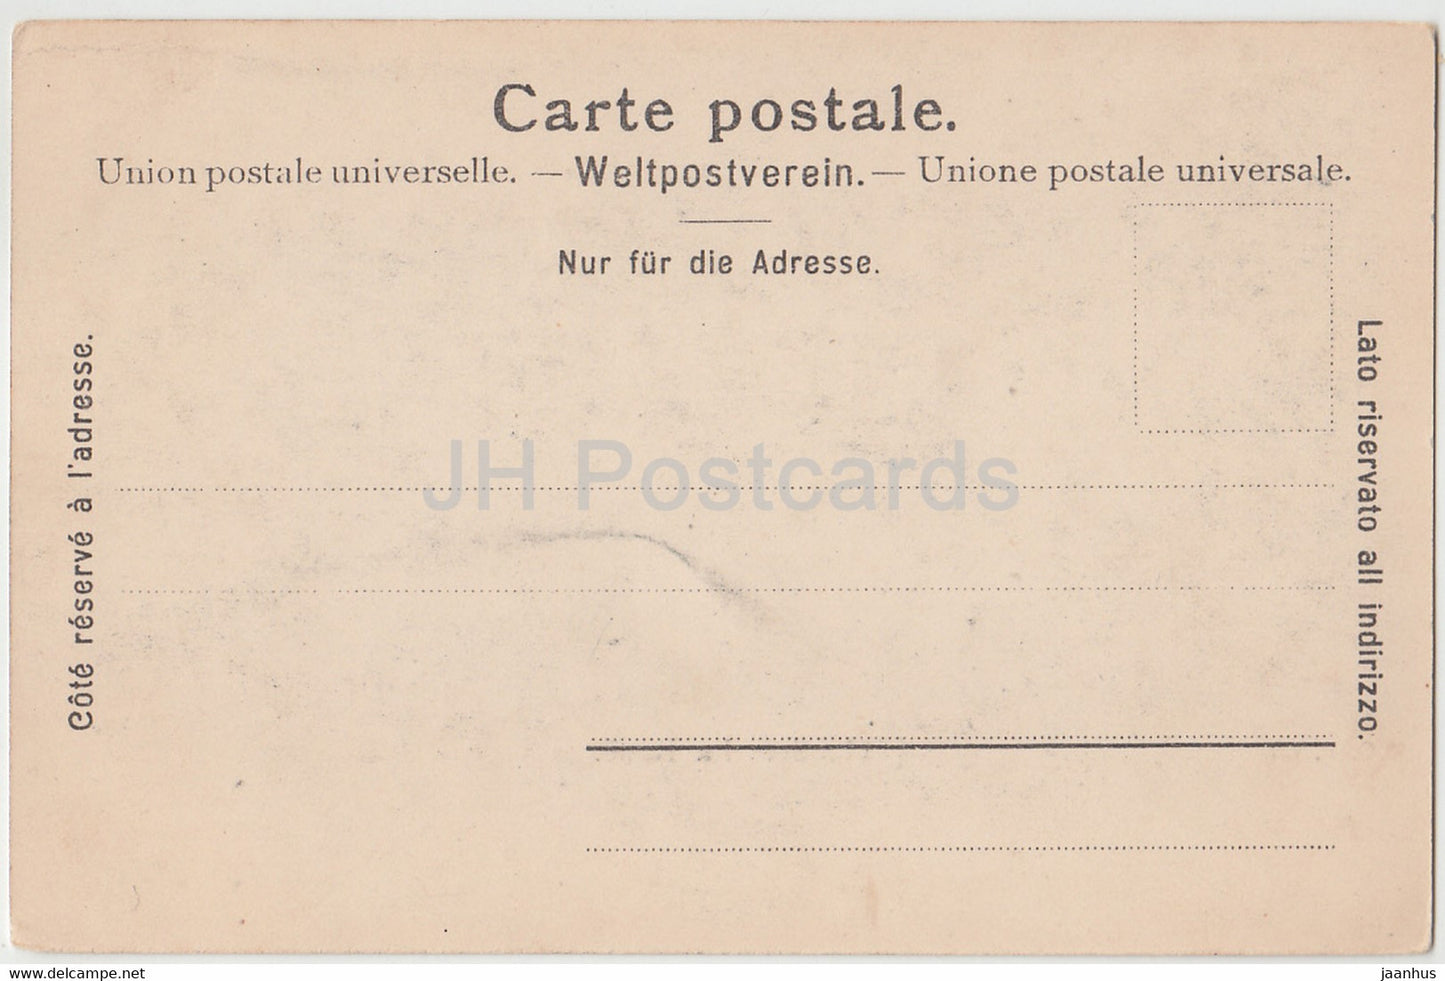 Geneve - Geneva - La Rade - steamer - ship - 127 - old postcard - Switzerland - unused